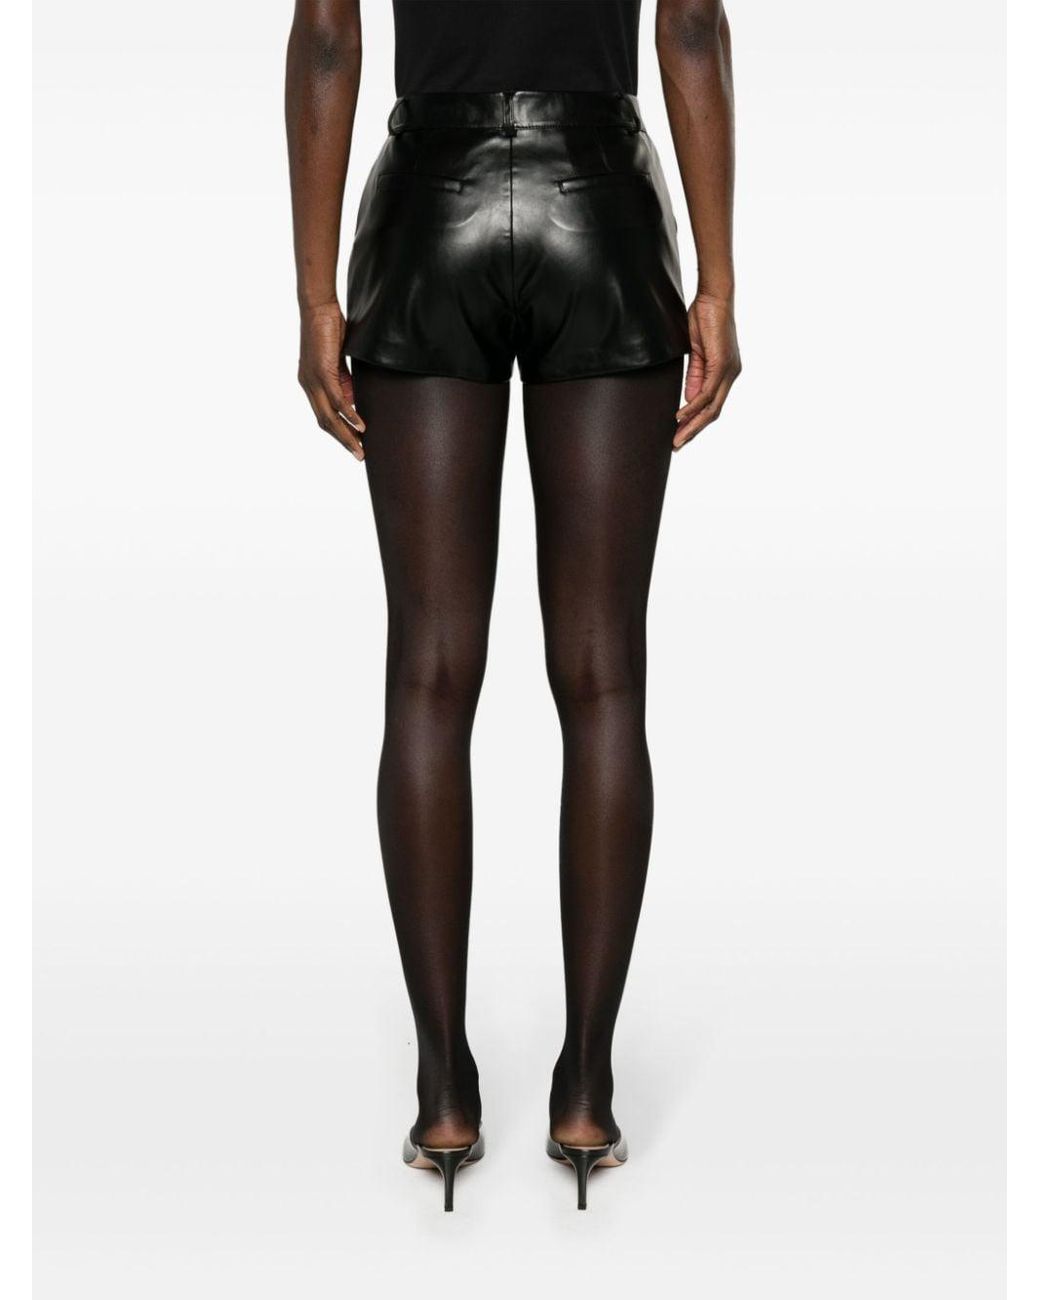 Pernille Faux Leather Pants - Black